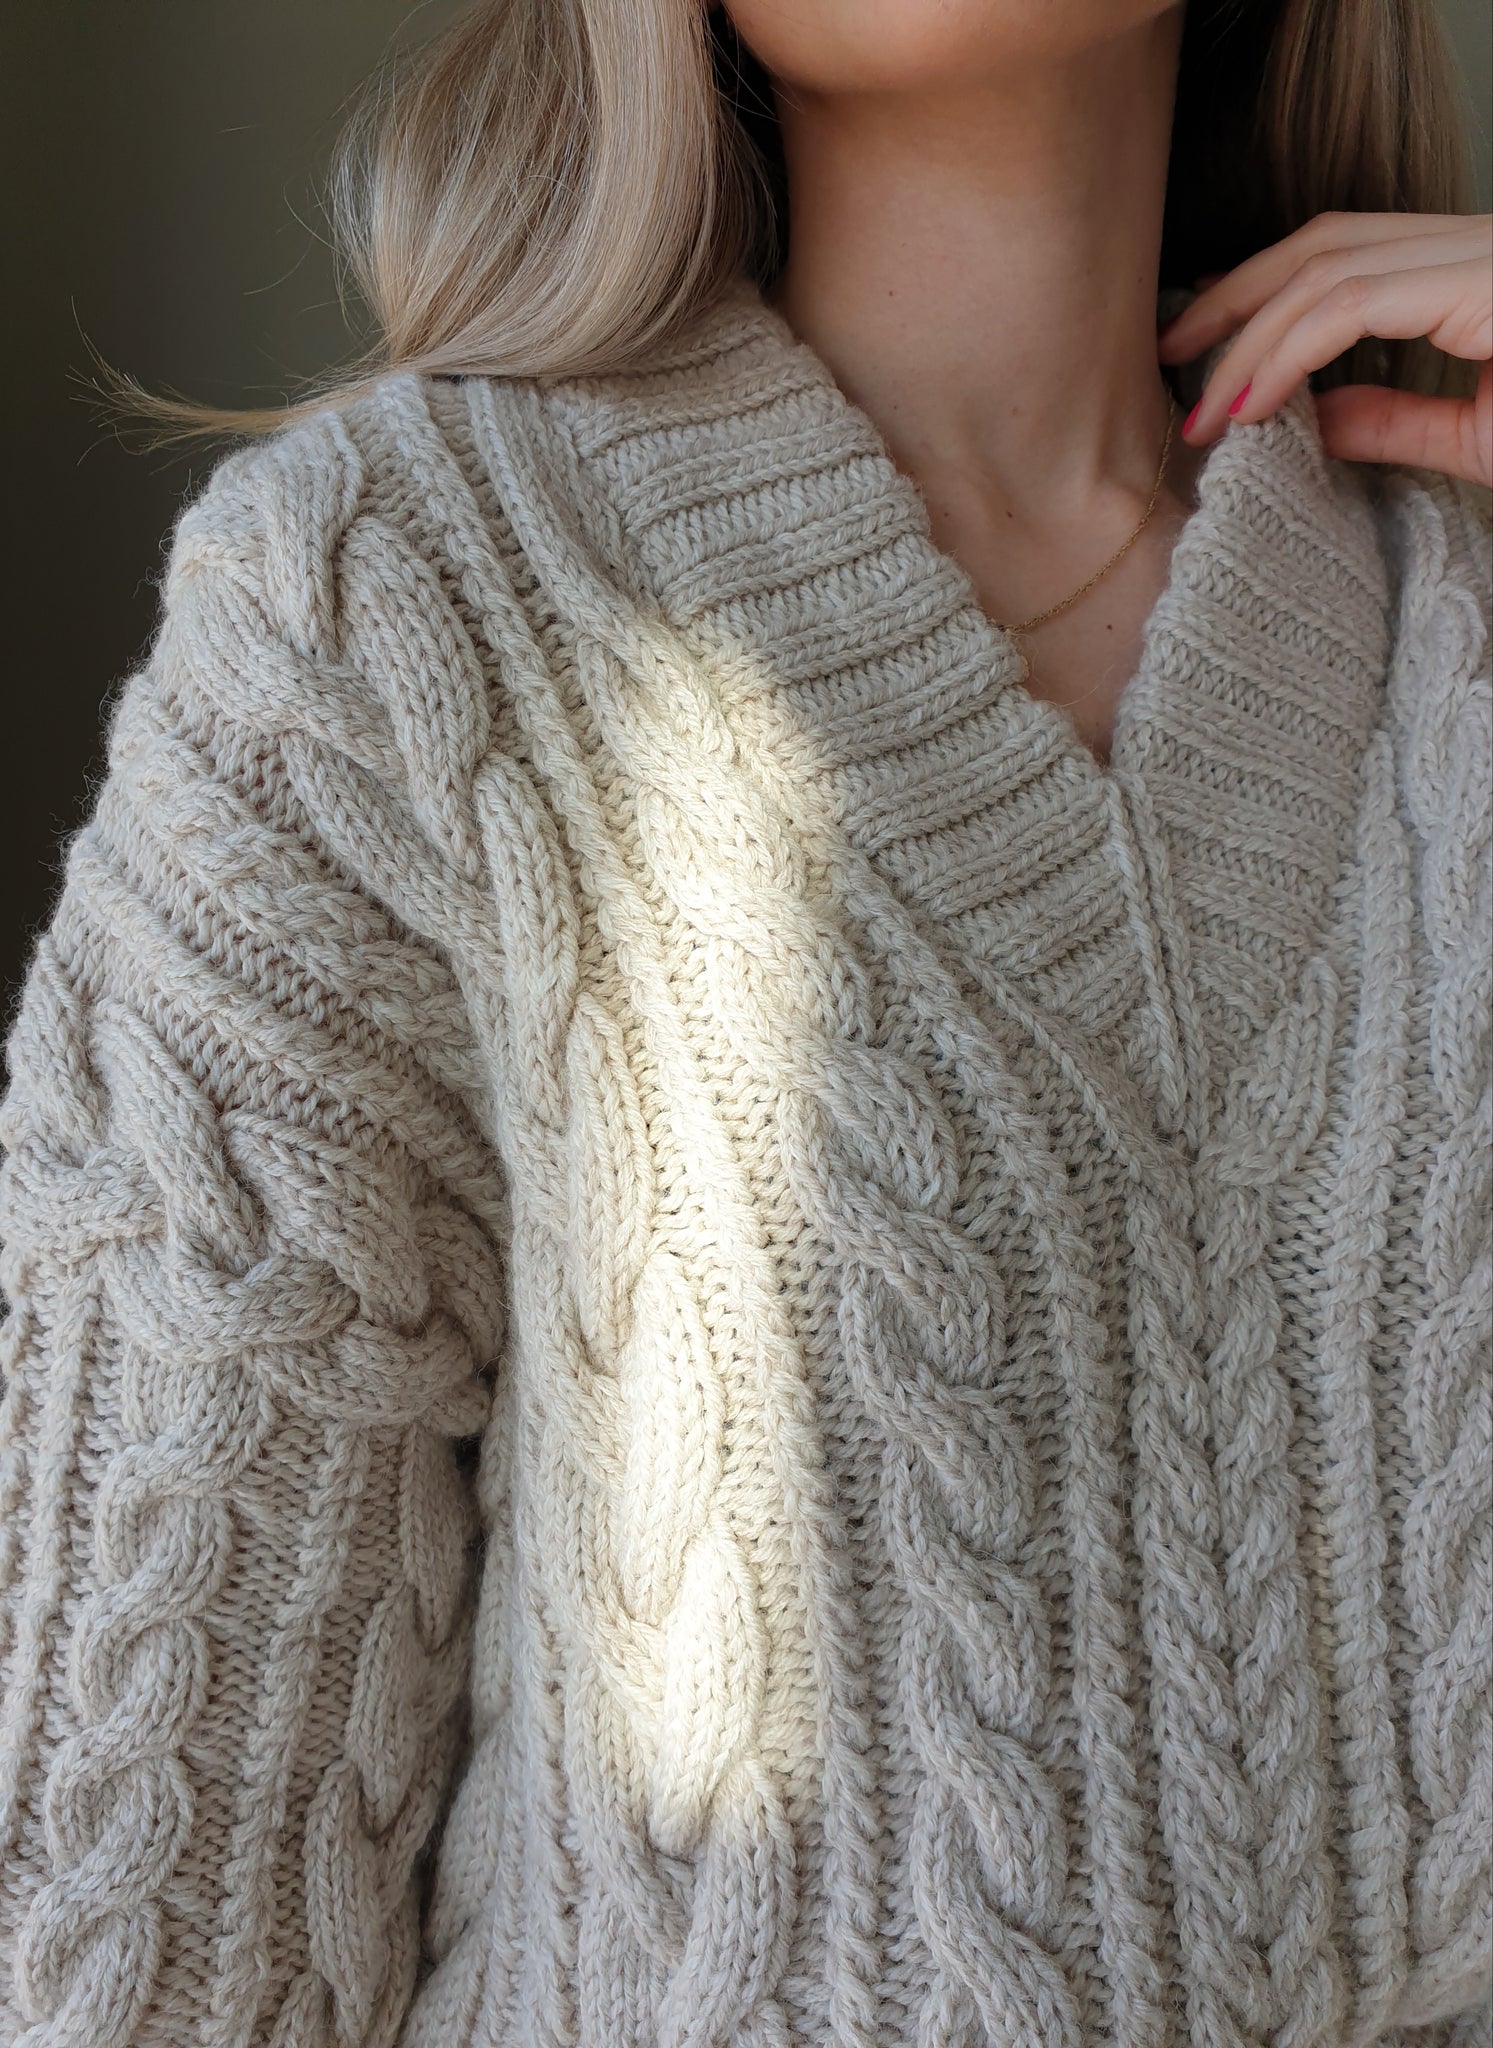 Sweater No. 20 - Knitting Pattern in English – • MY FAVOURITE THINGS •  KNITWEAR